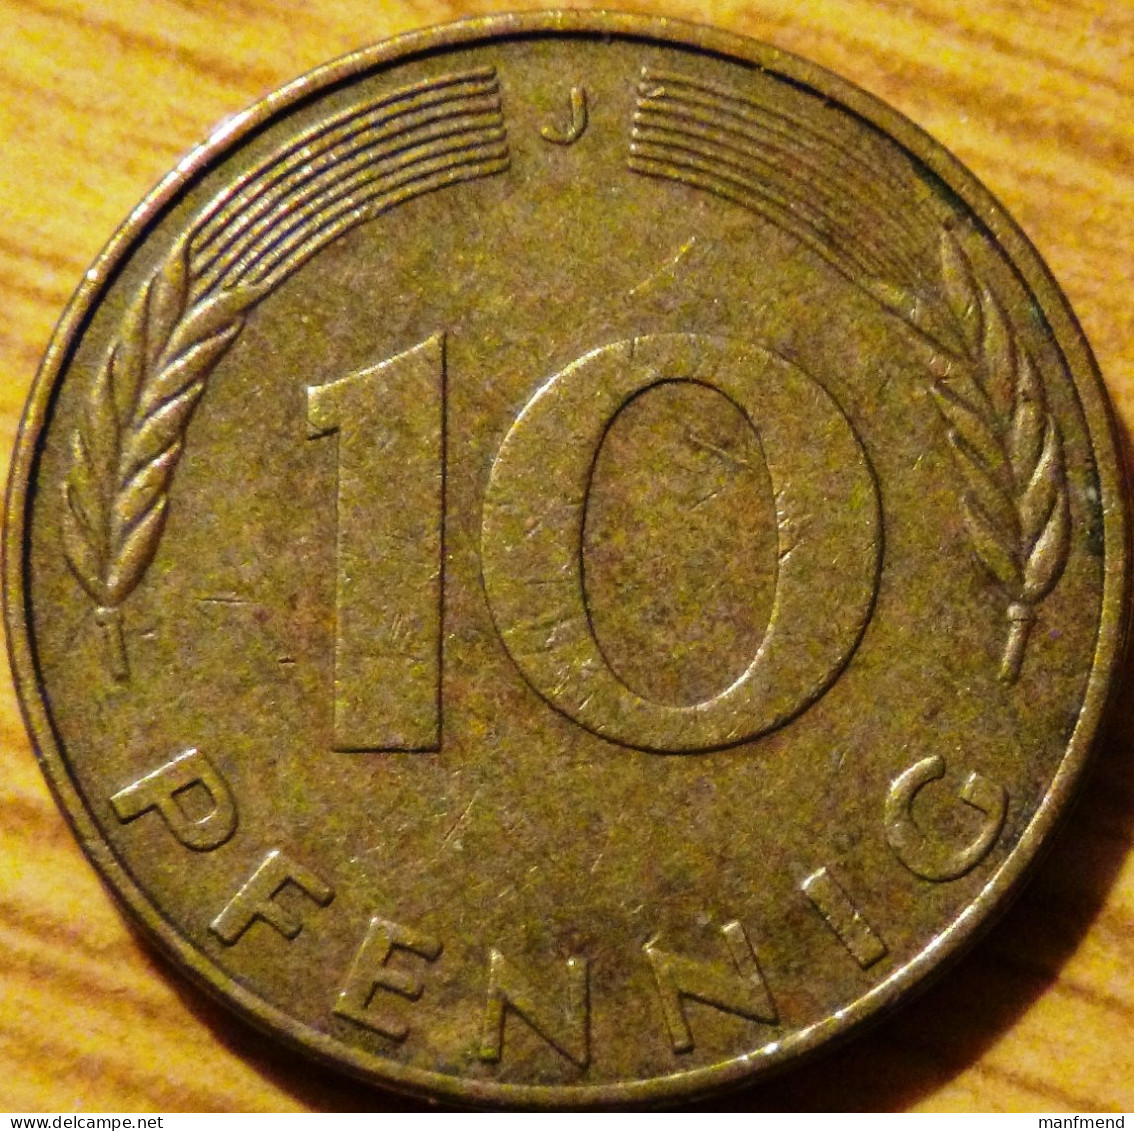 Germany - KM 108 - 1989 - 10 Pfennig - Mintmark "J" - Hamburg - VF - Look Scans - 10 Pfennig